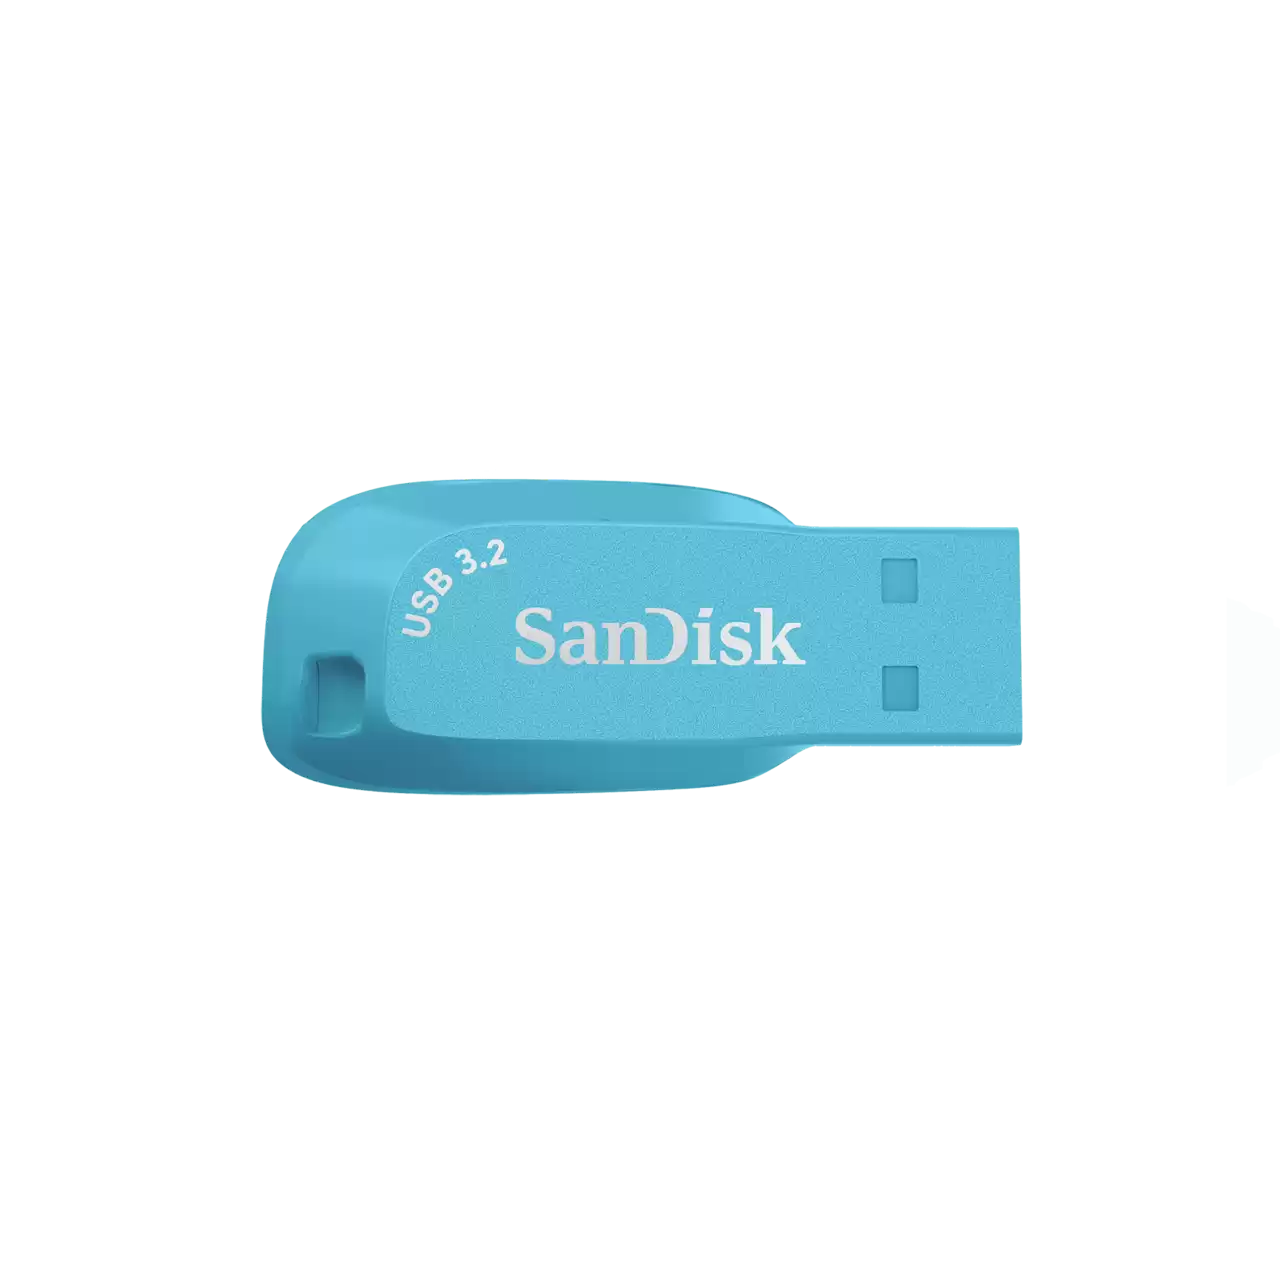 PENDRIVE USB SANDISK 32GB ULTRA SHIFT 3.0 SDCZ410-032G-G46